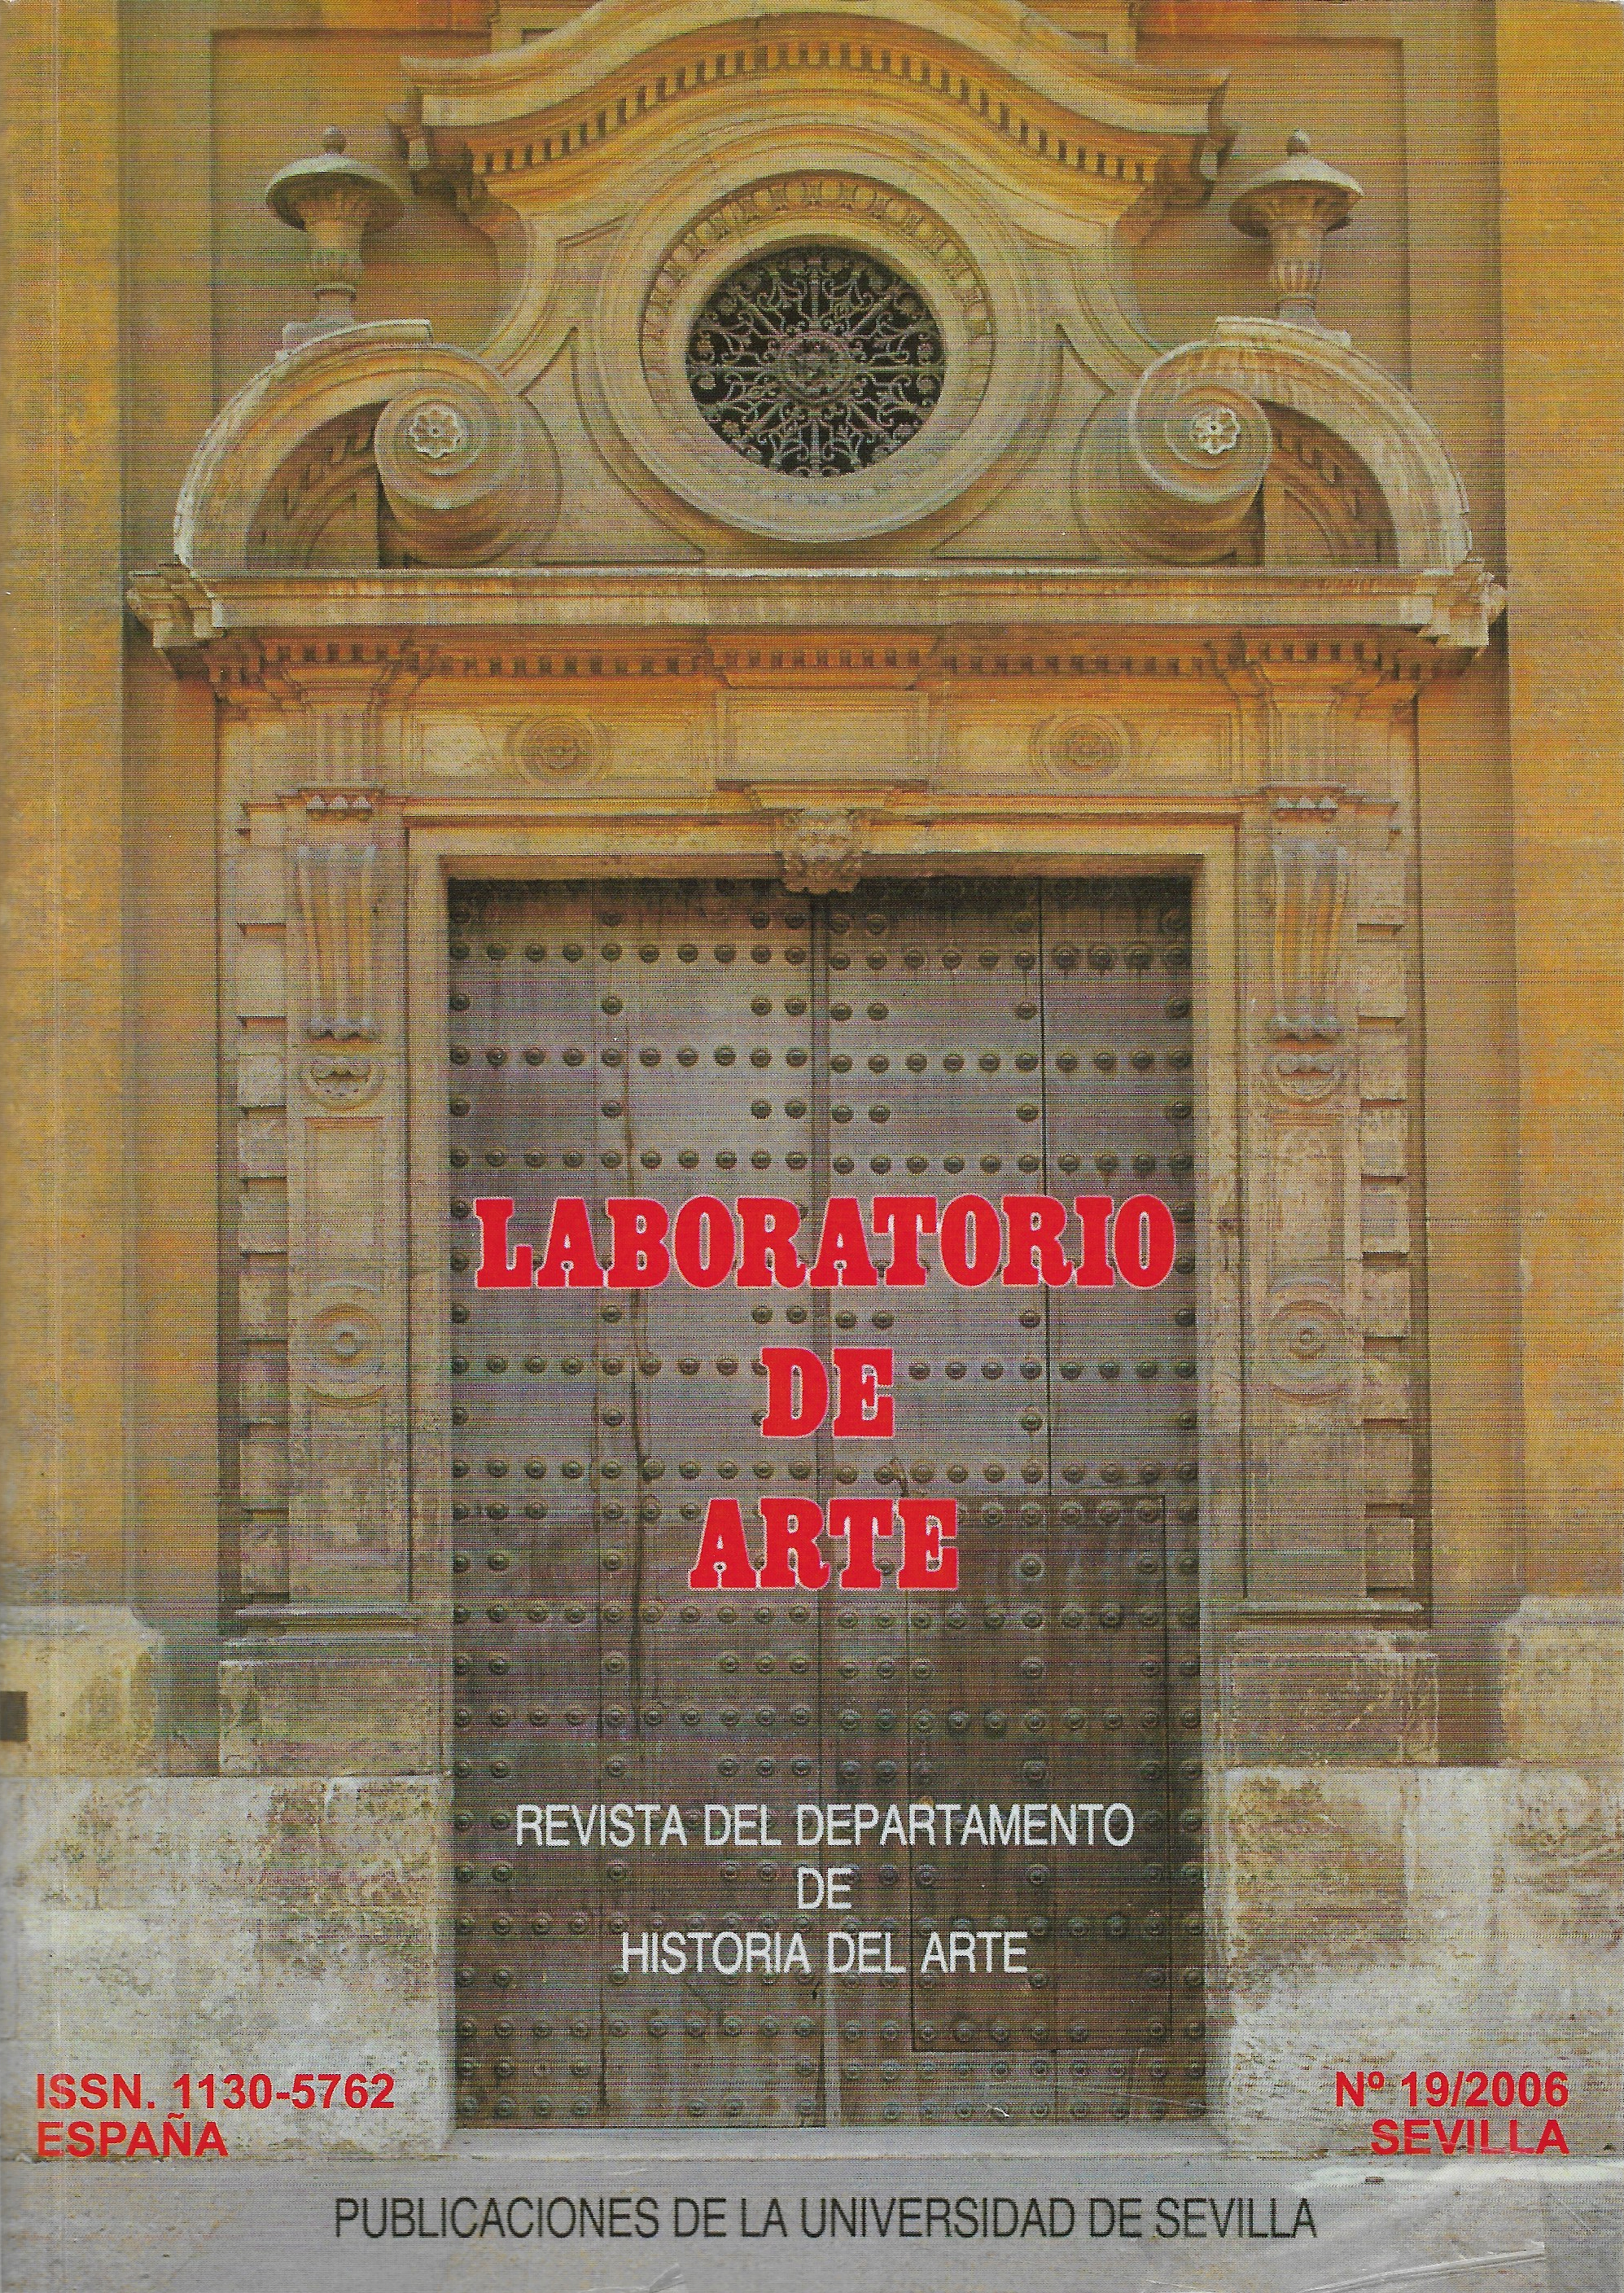 					Ver Núm. 19 (2006): LABORATORIO DE ARTE
				